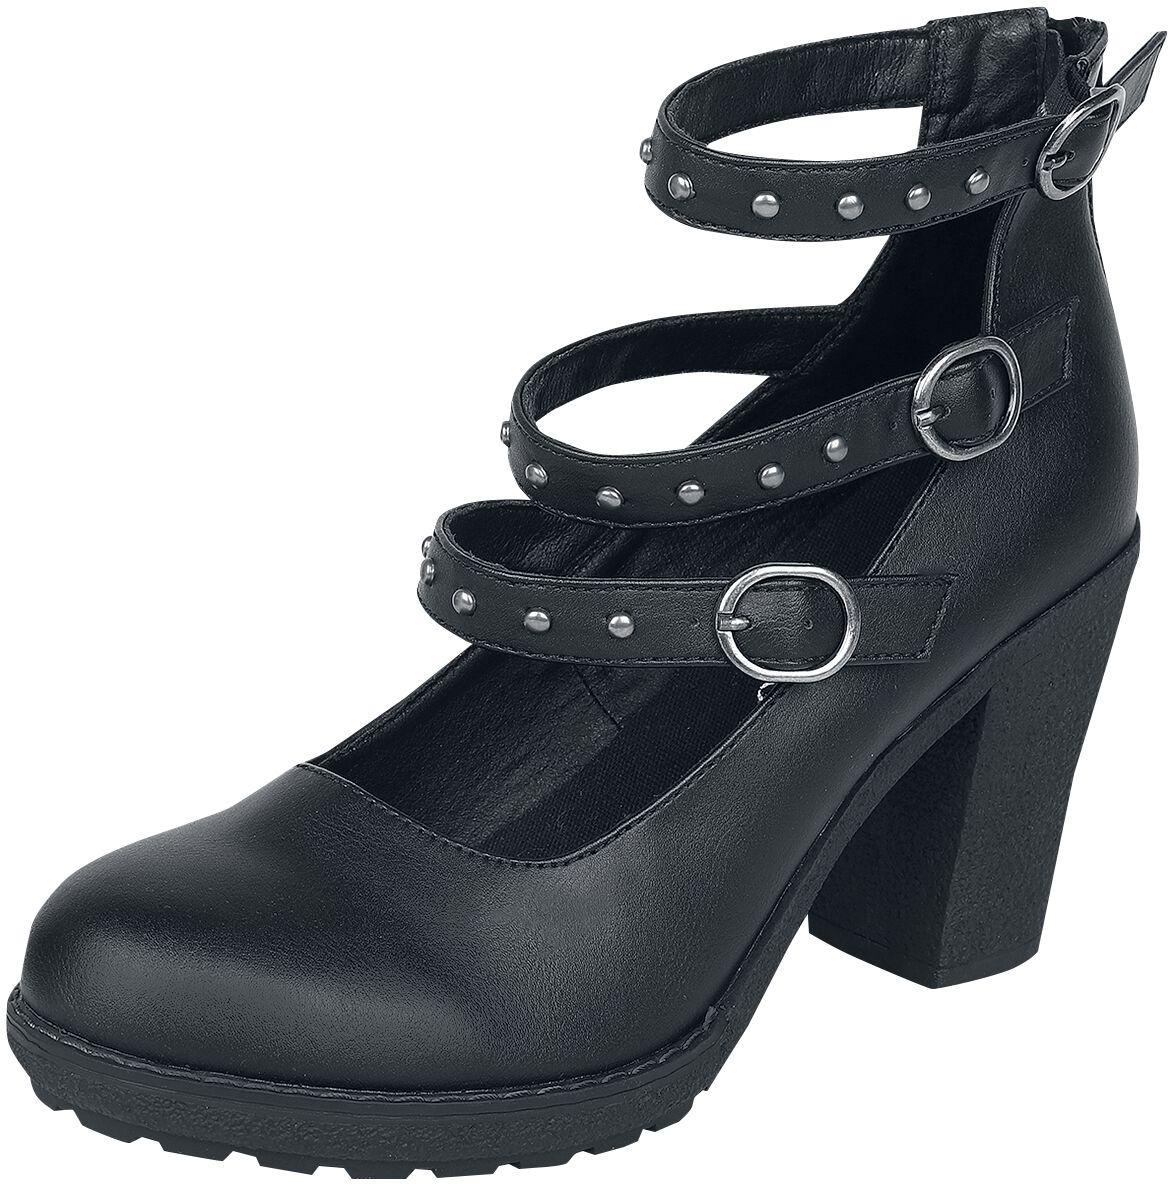 Image of Tacco alto Gothic di Gothicana by EMP - High heels with straps and rivets - EU37 a EU41 - Donna - nero